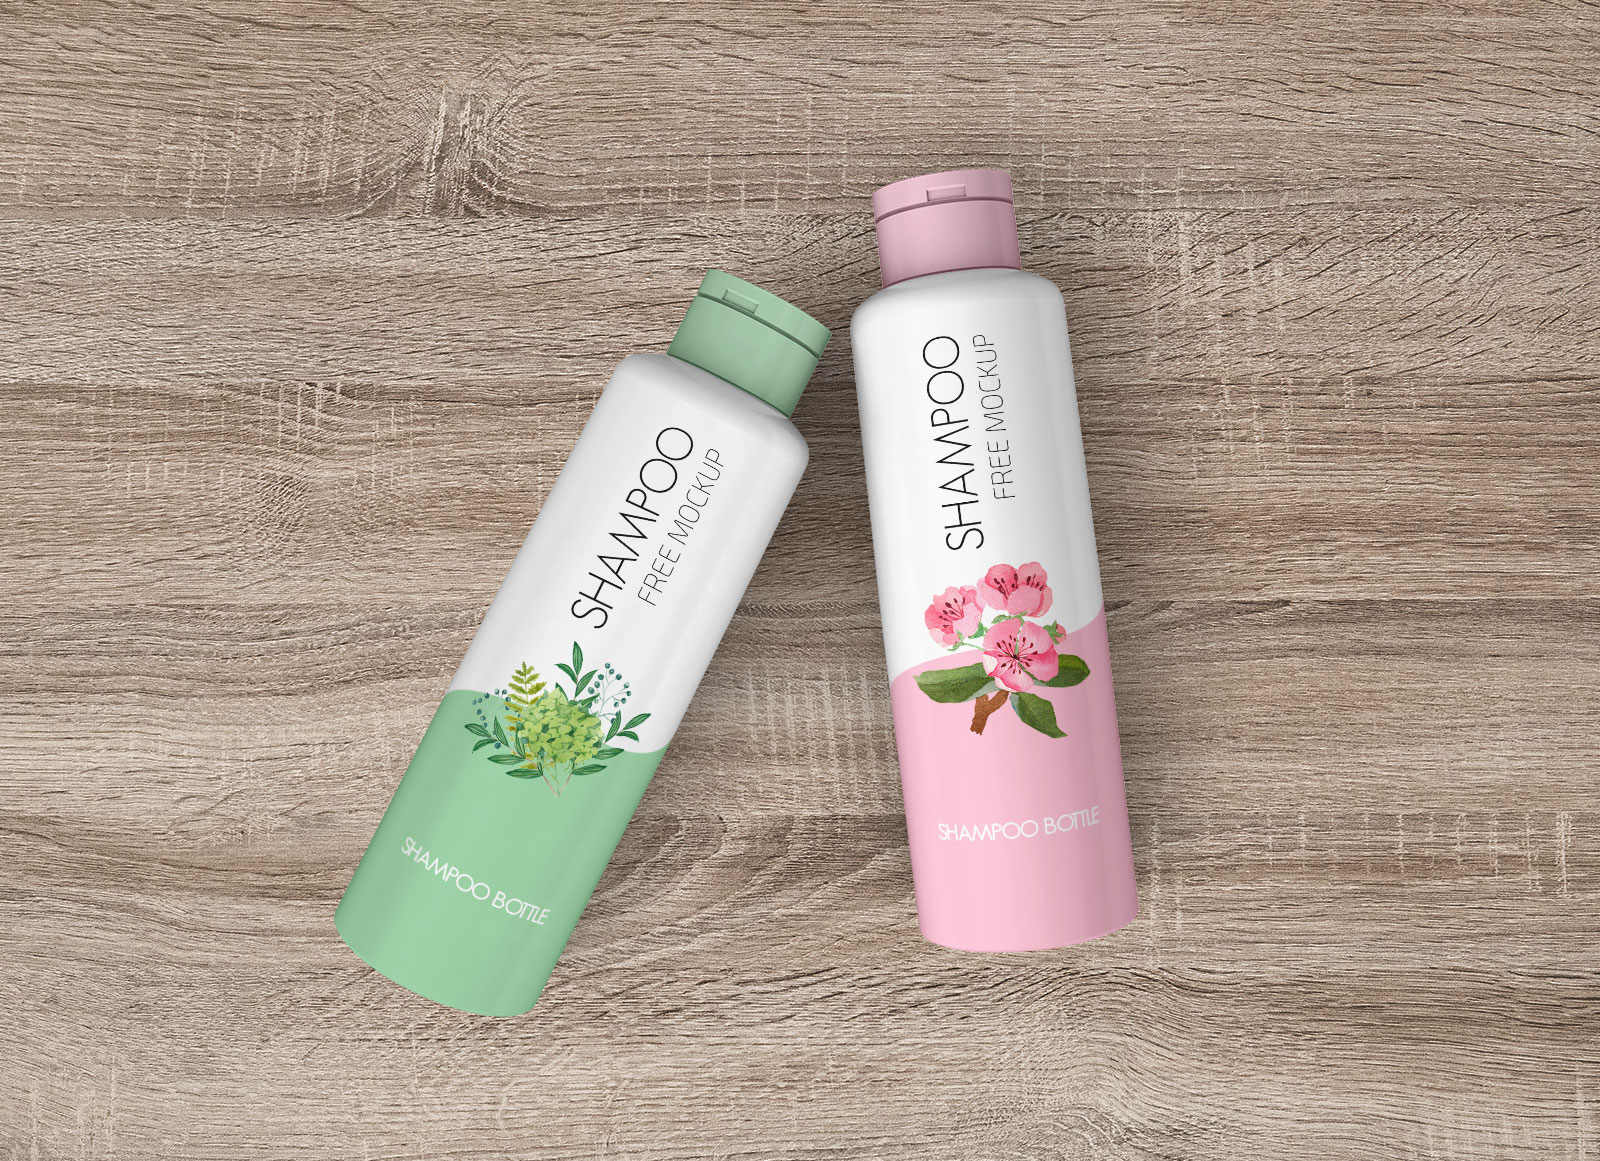 Download Free Cosmetic Cream / Shampoo Bottle Mockup PSD Set - Good ...